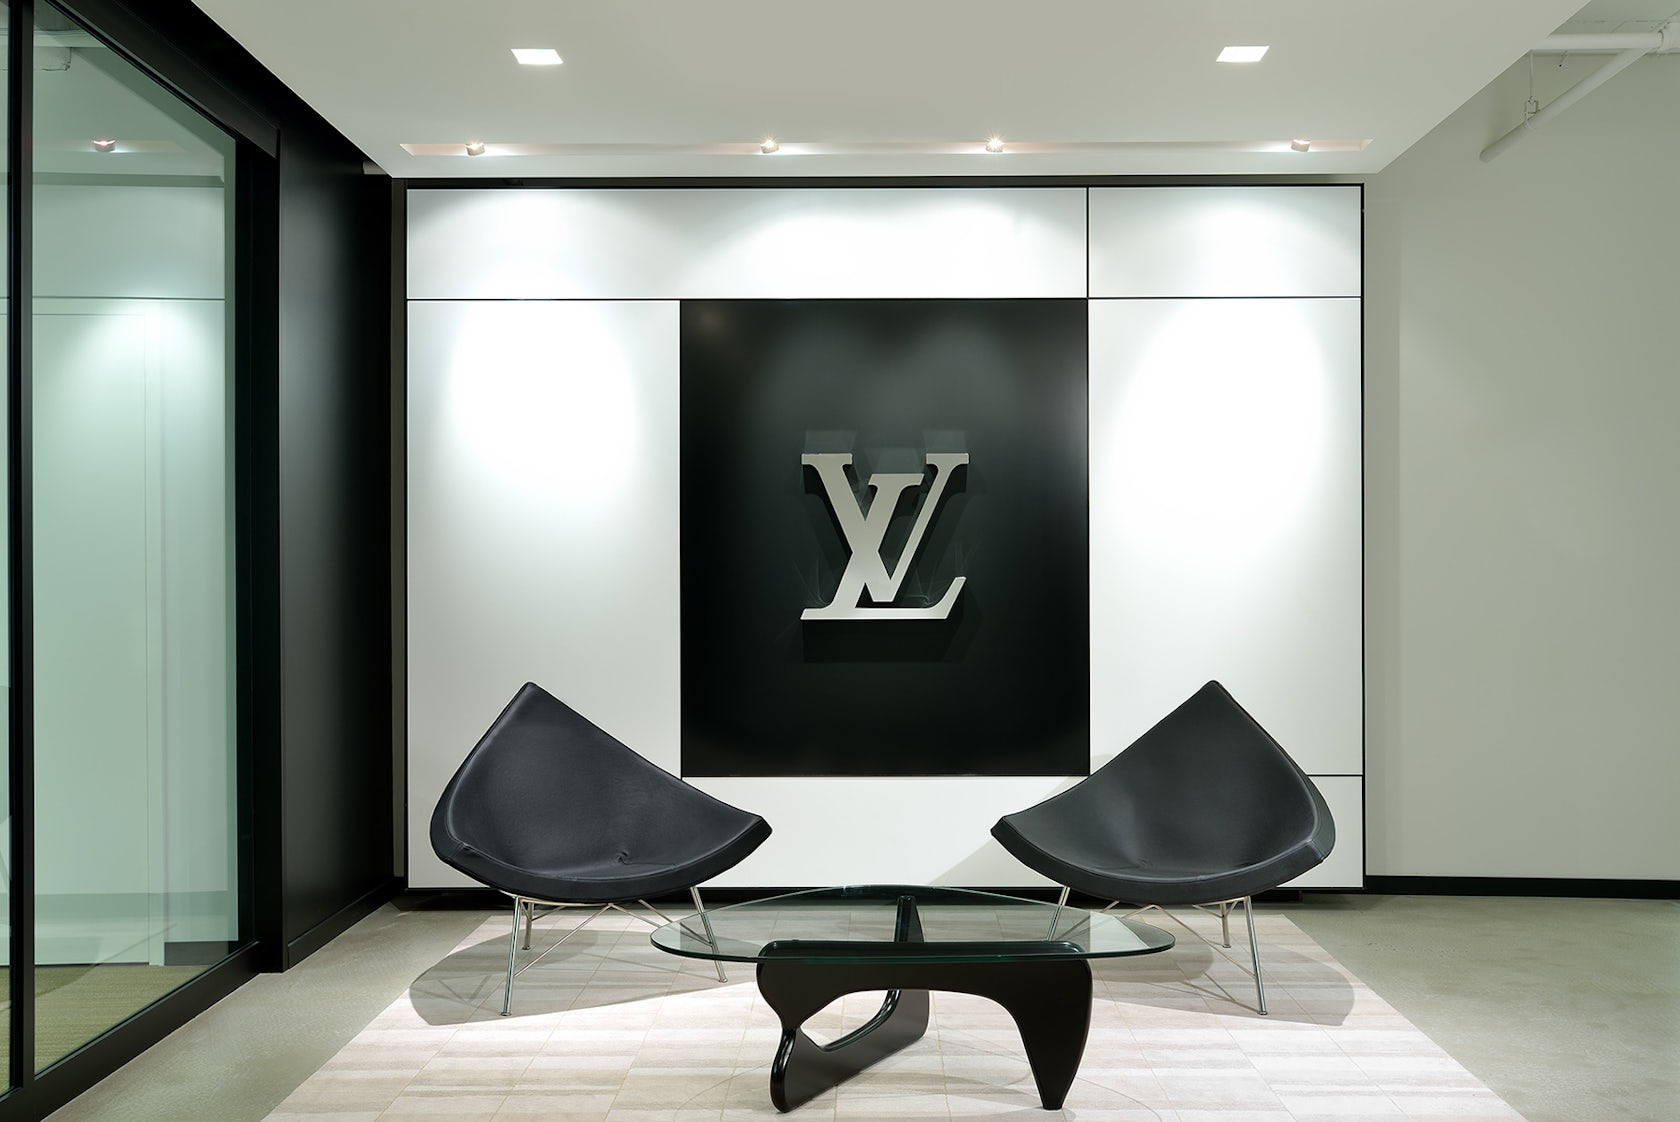 Louis Vuitton Corporate Office - Toronto by dkstudio architects